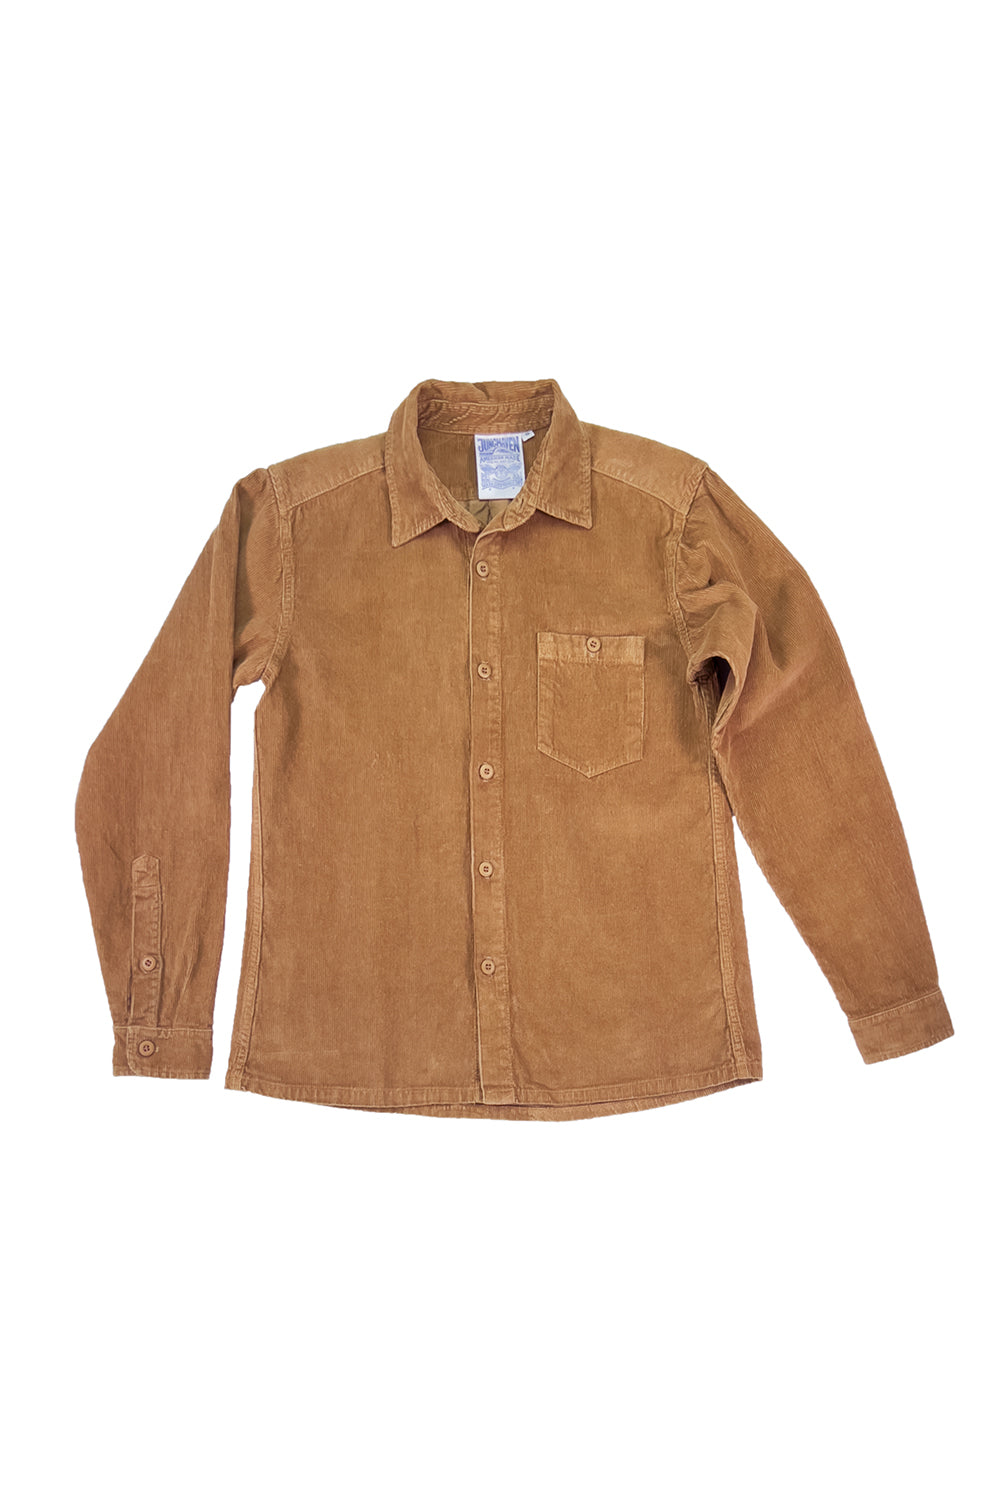 Ventura Shirt | Jungmaven Hemp Clothing & Accessories / Color: Coyote